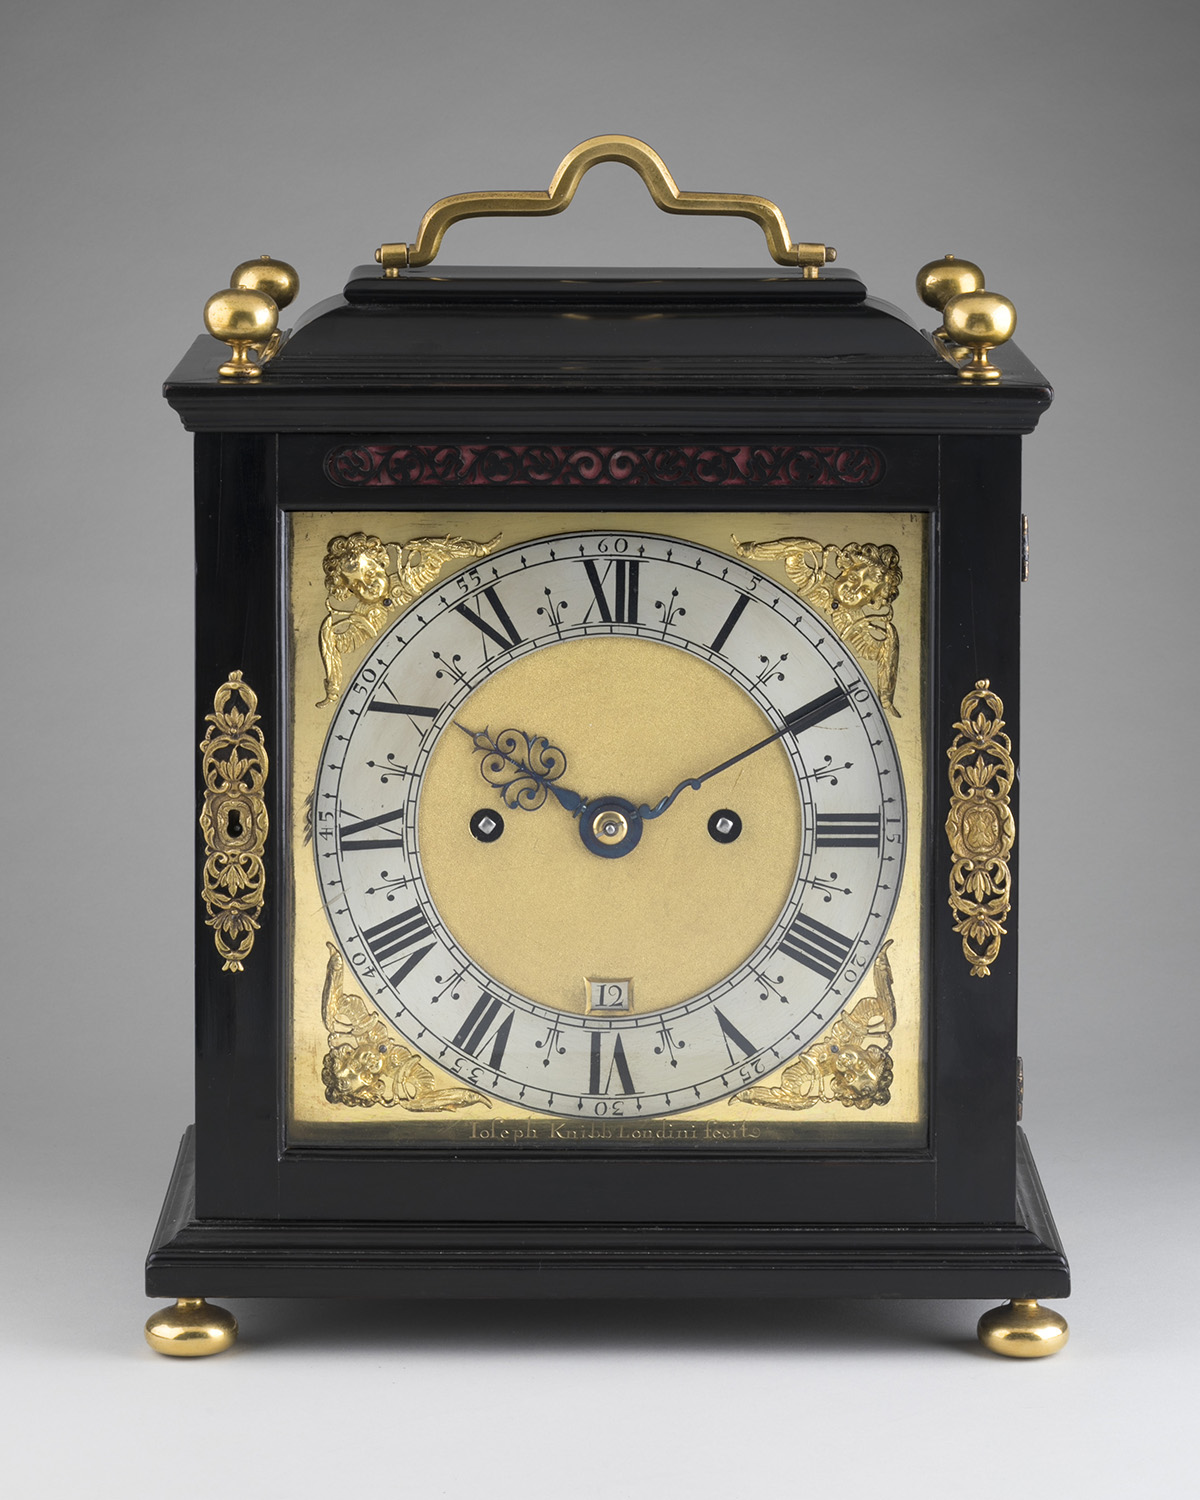 Carter Marsh & Co. Ltd (Antique Clocks) – Joseph Knibb Londini Fecit ...